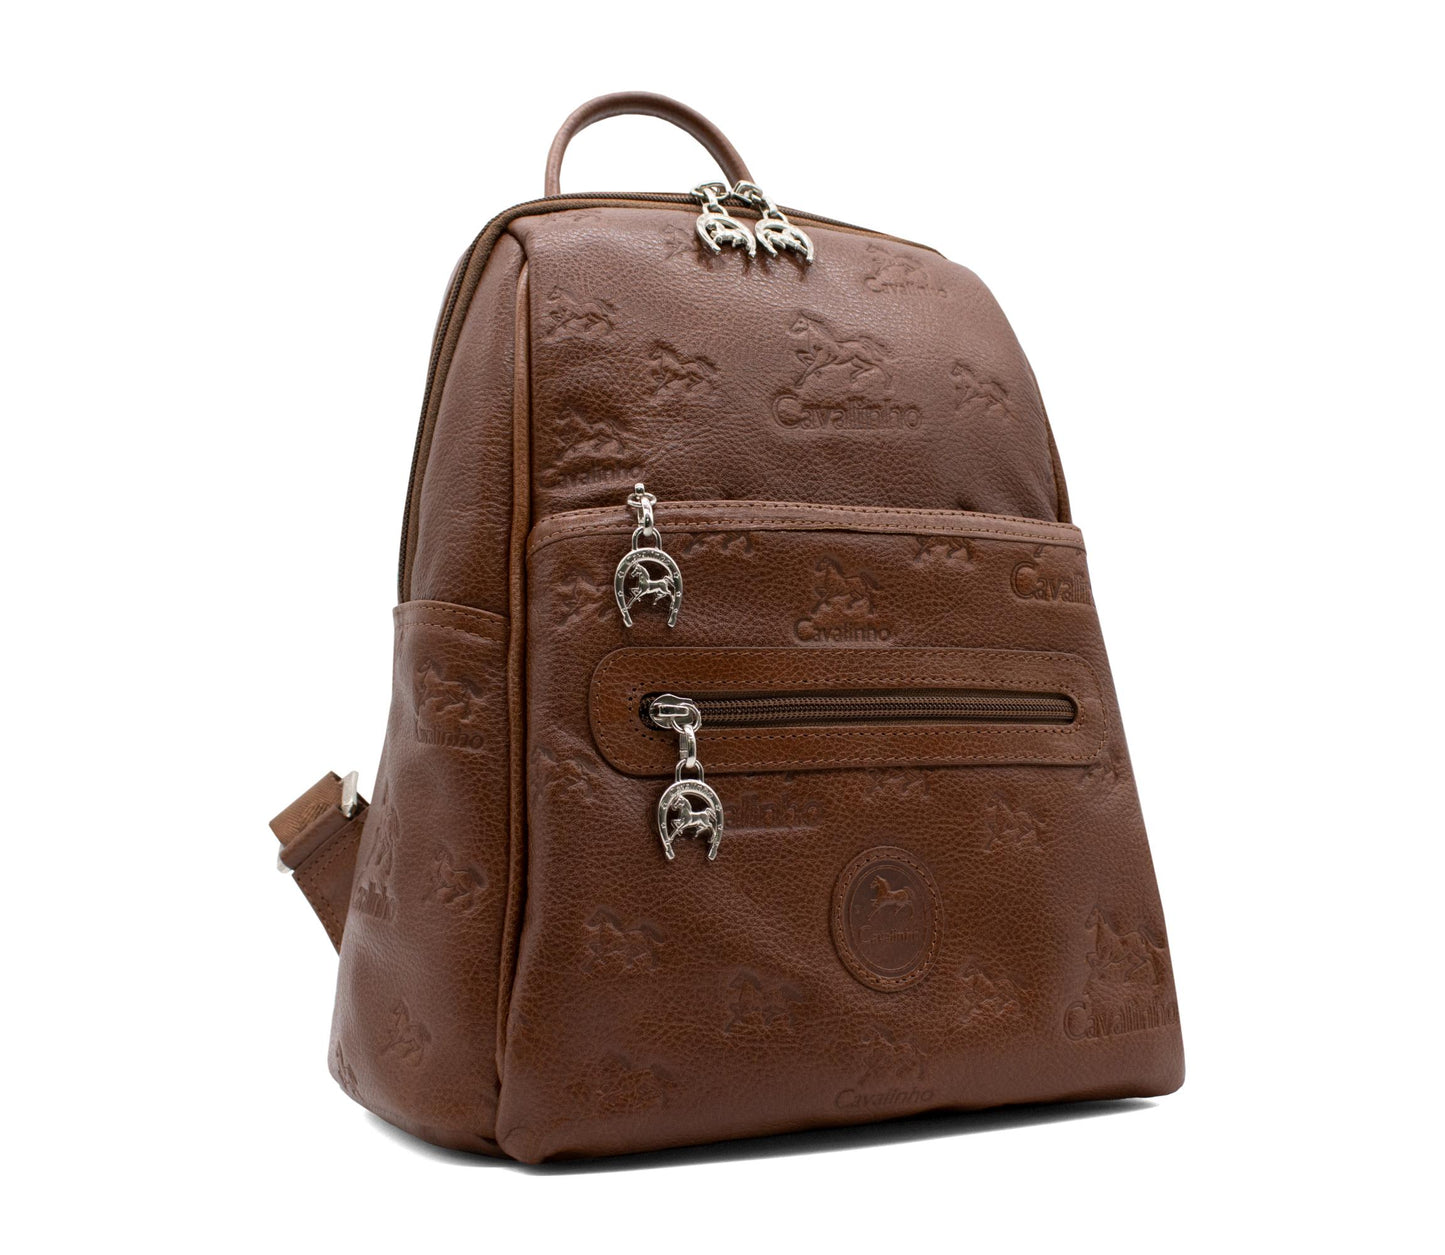 Cavalinho Cavalo Lusitano Leather Backpack - SaddleBrown - 18090412.13_2